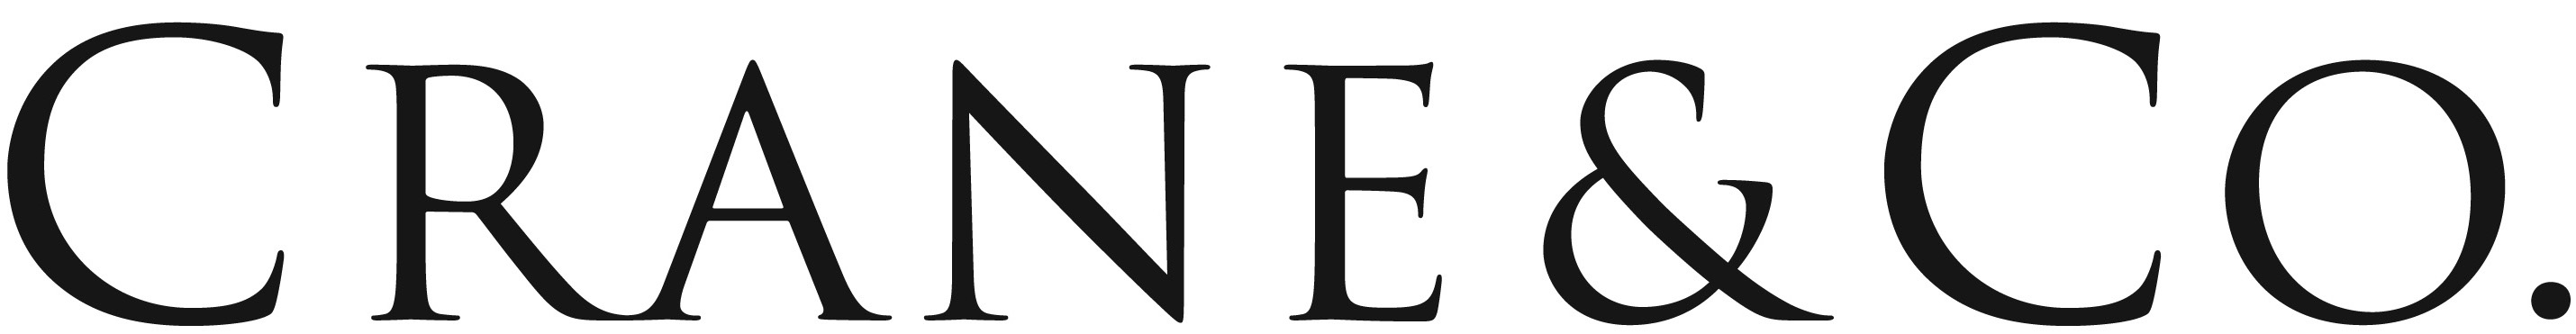 CraneCo Logo - File:Crane-co-logo.PNG - Wikimedia Commons